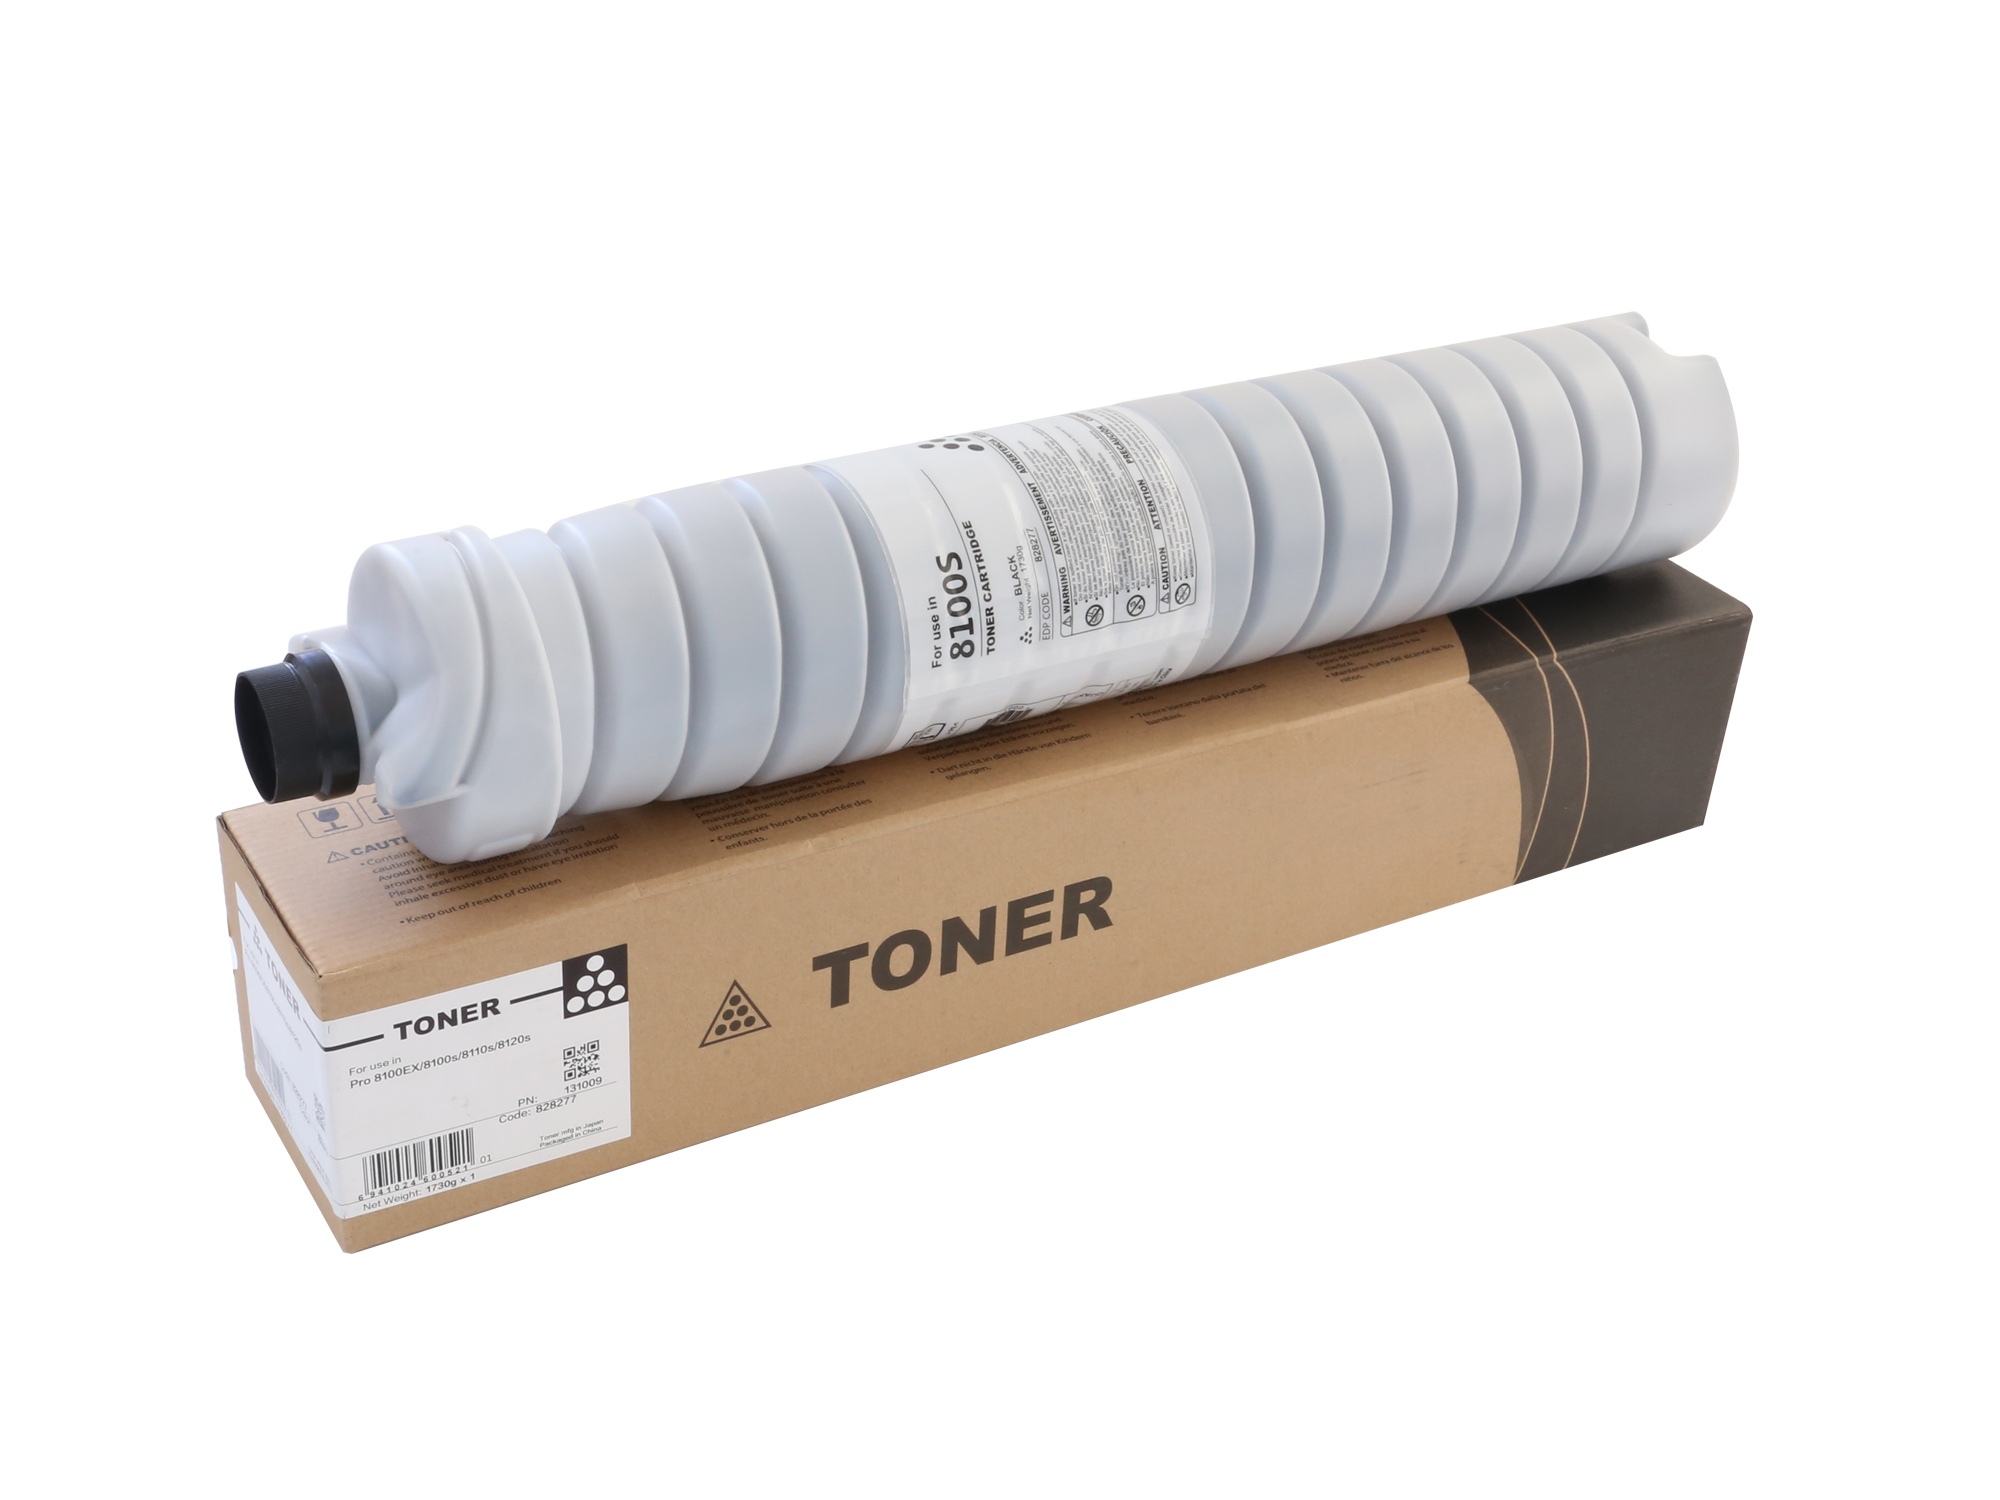 828277 Toner Cartridge for Ricoh Pro 8100EX